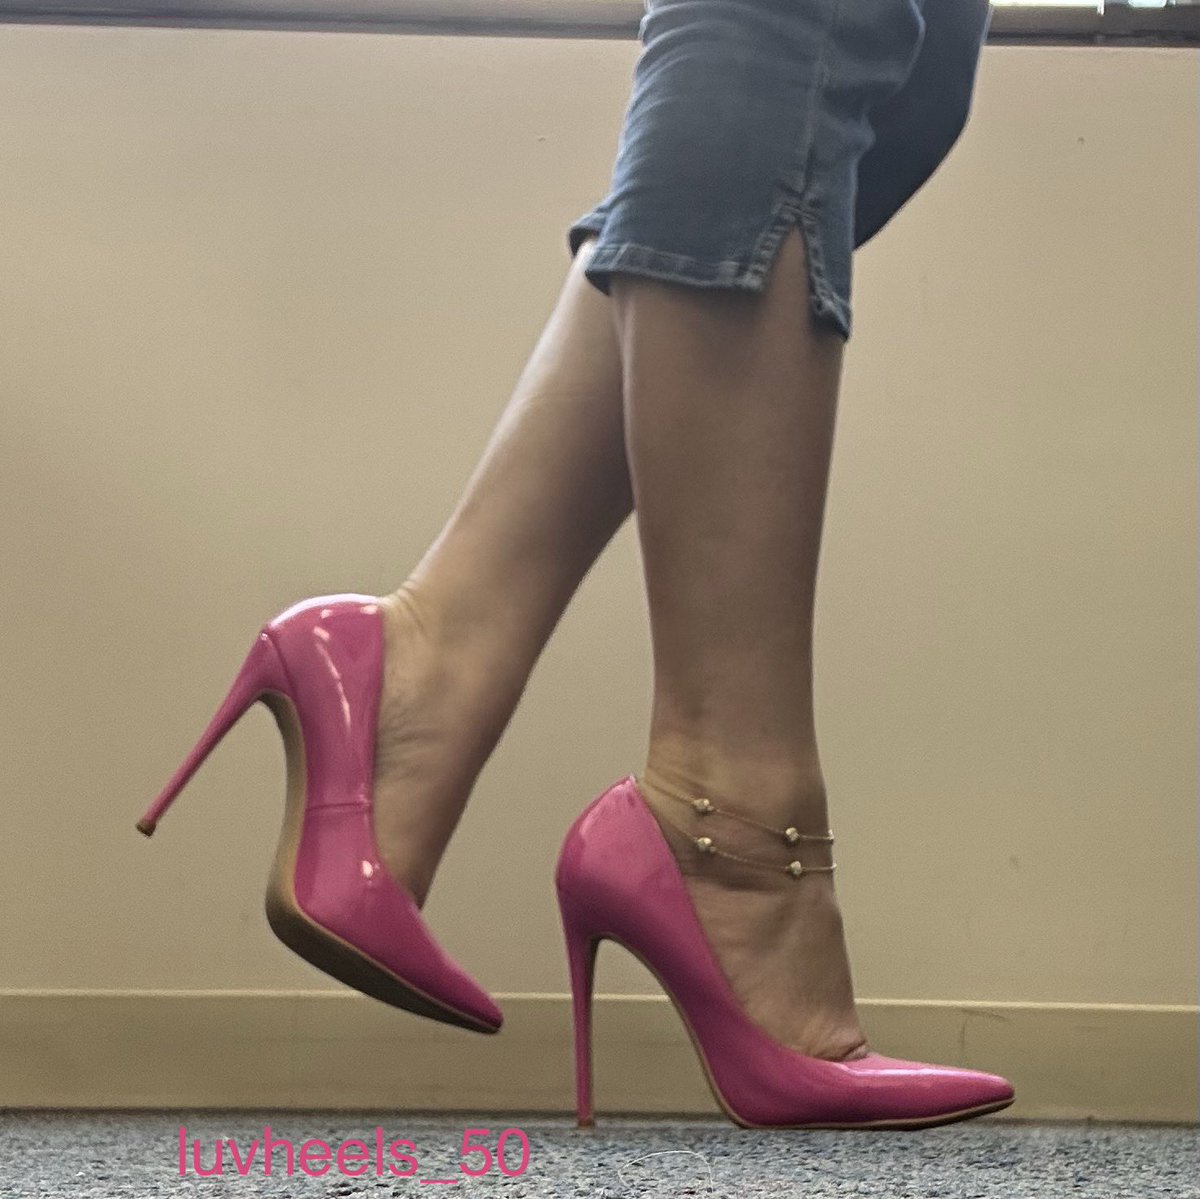 #luvshoes #highheels #heels #thursdayvibes #shoes #stilettos #barbiepink 💗 #officeheels #pink